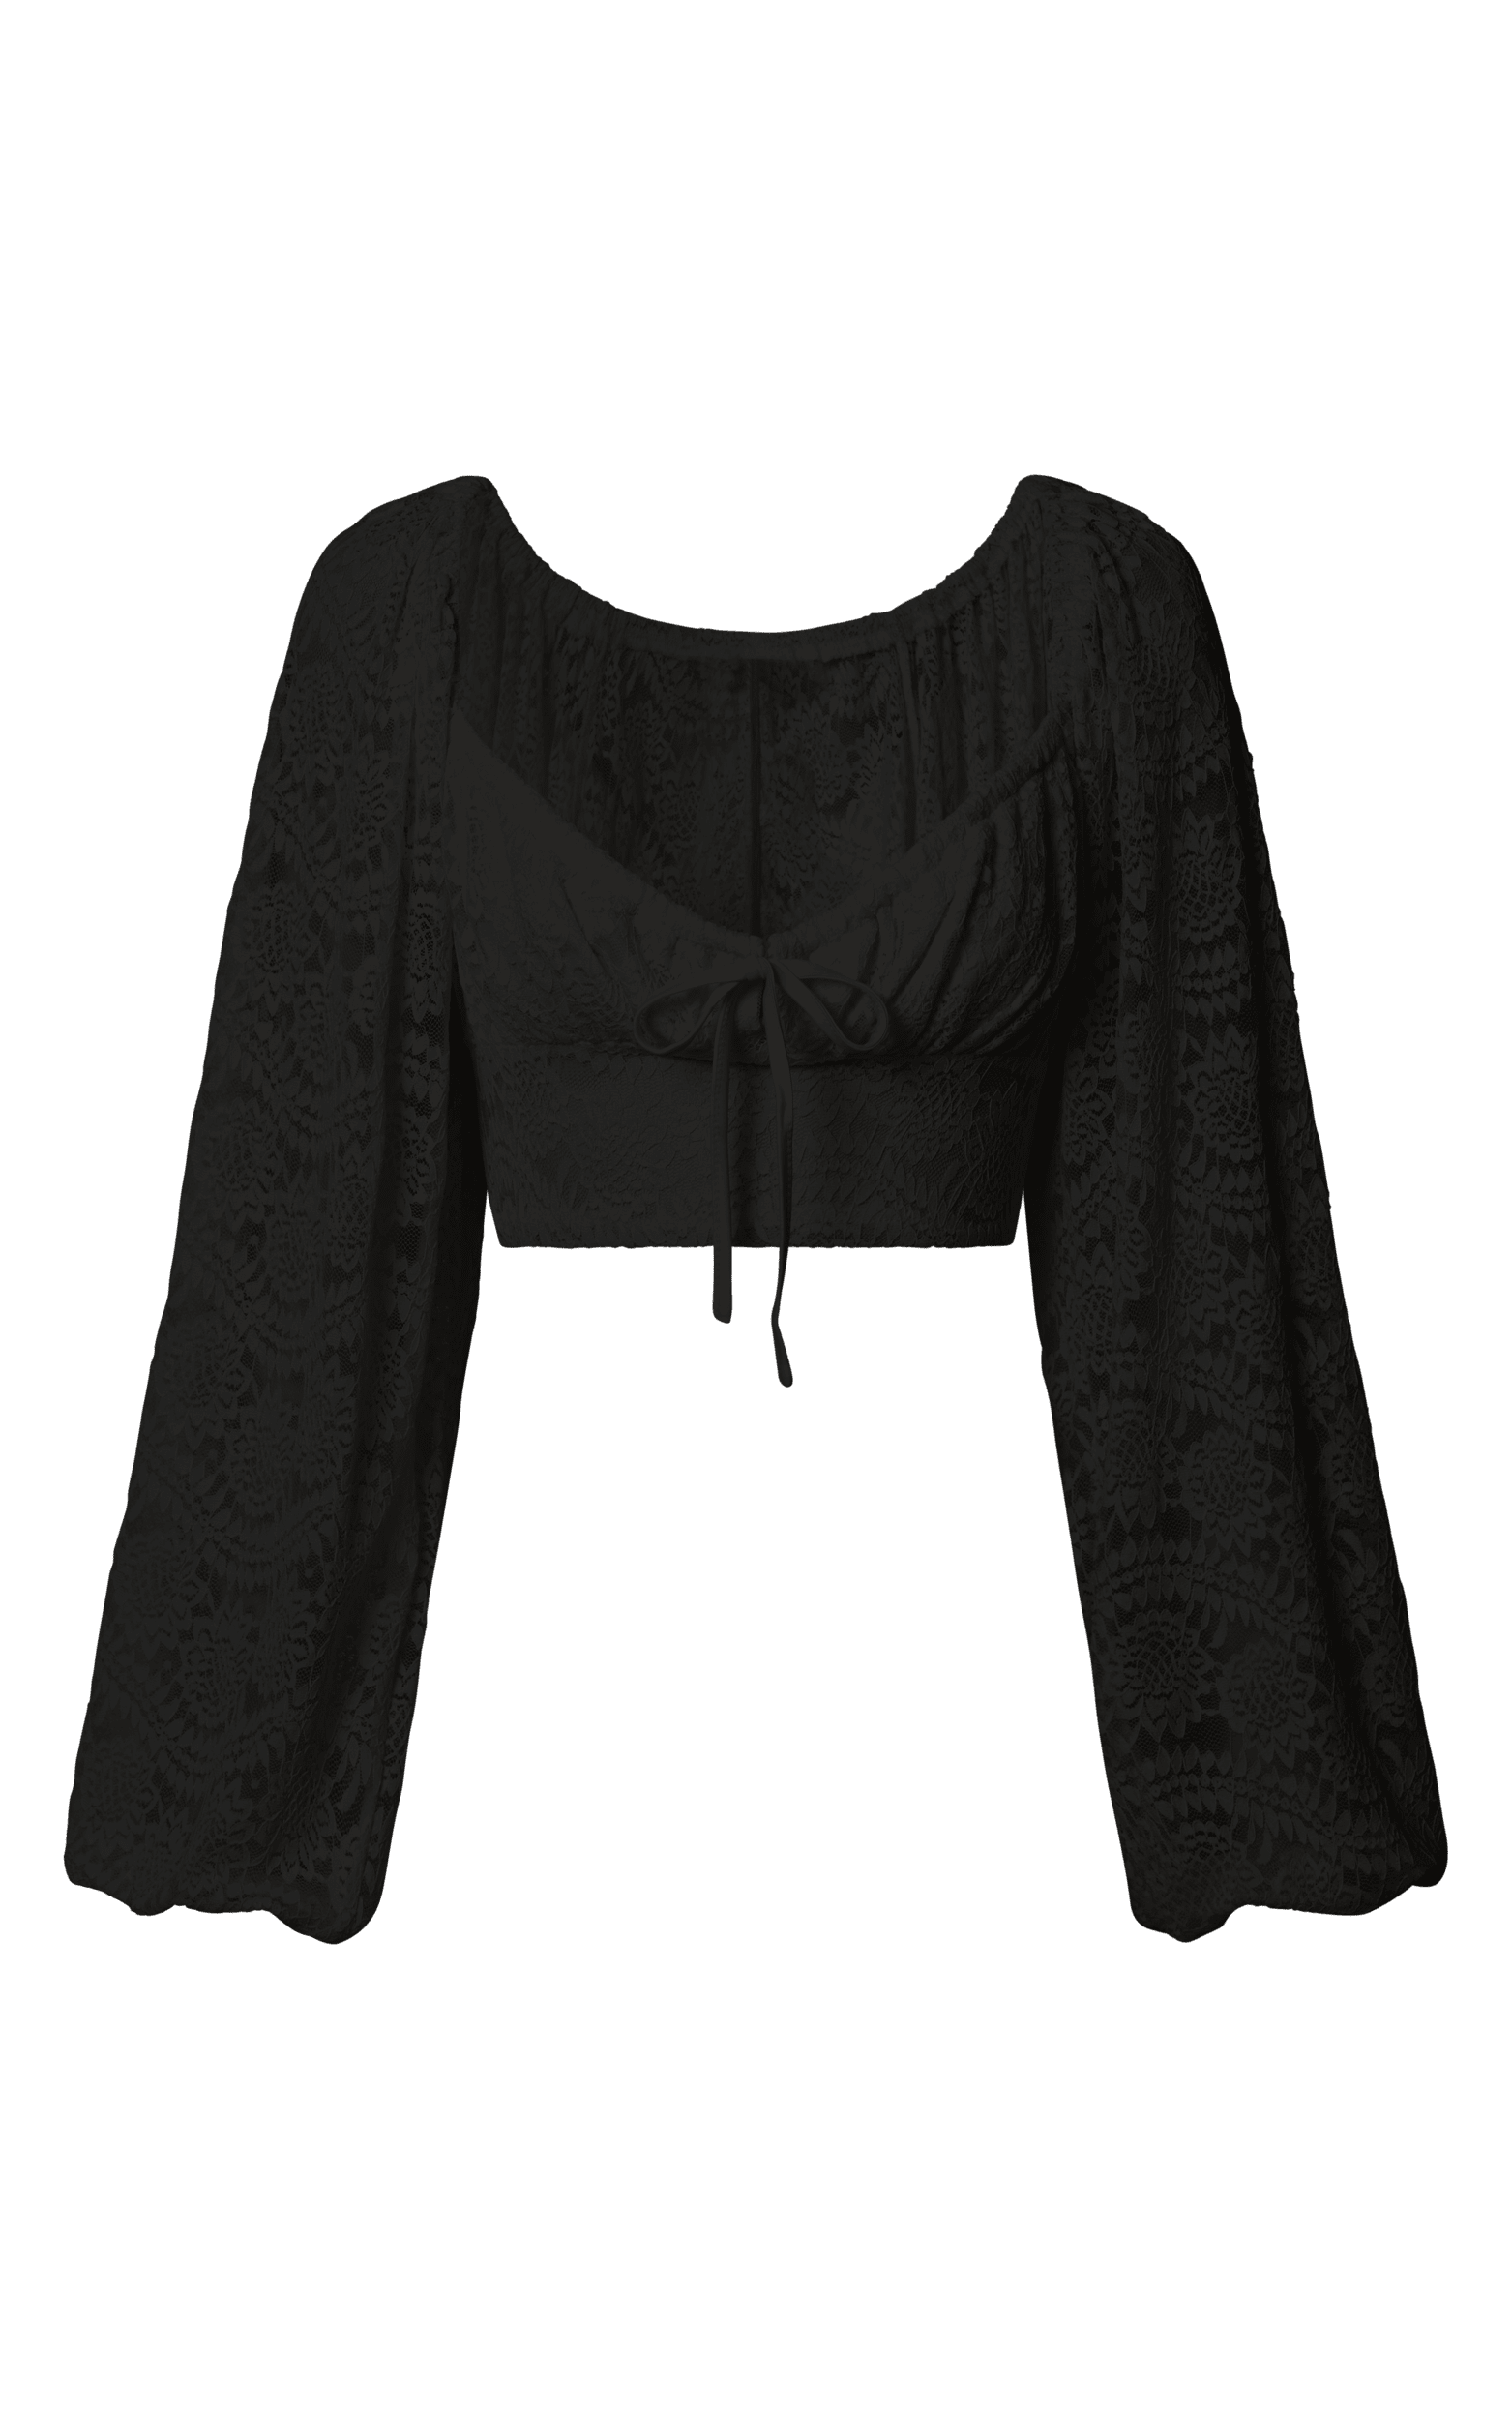 Mehca Top - Lace Blouson Sleeve Crop Top in Black | Showpo